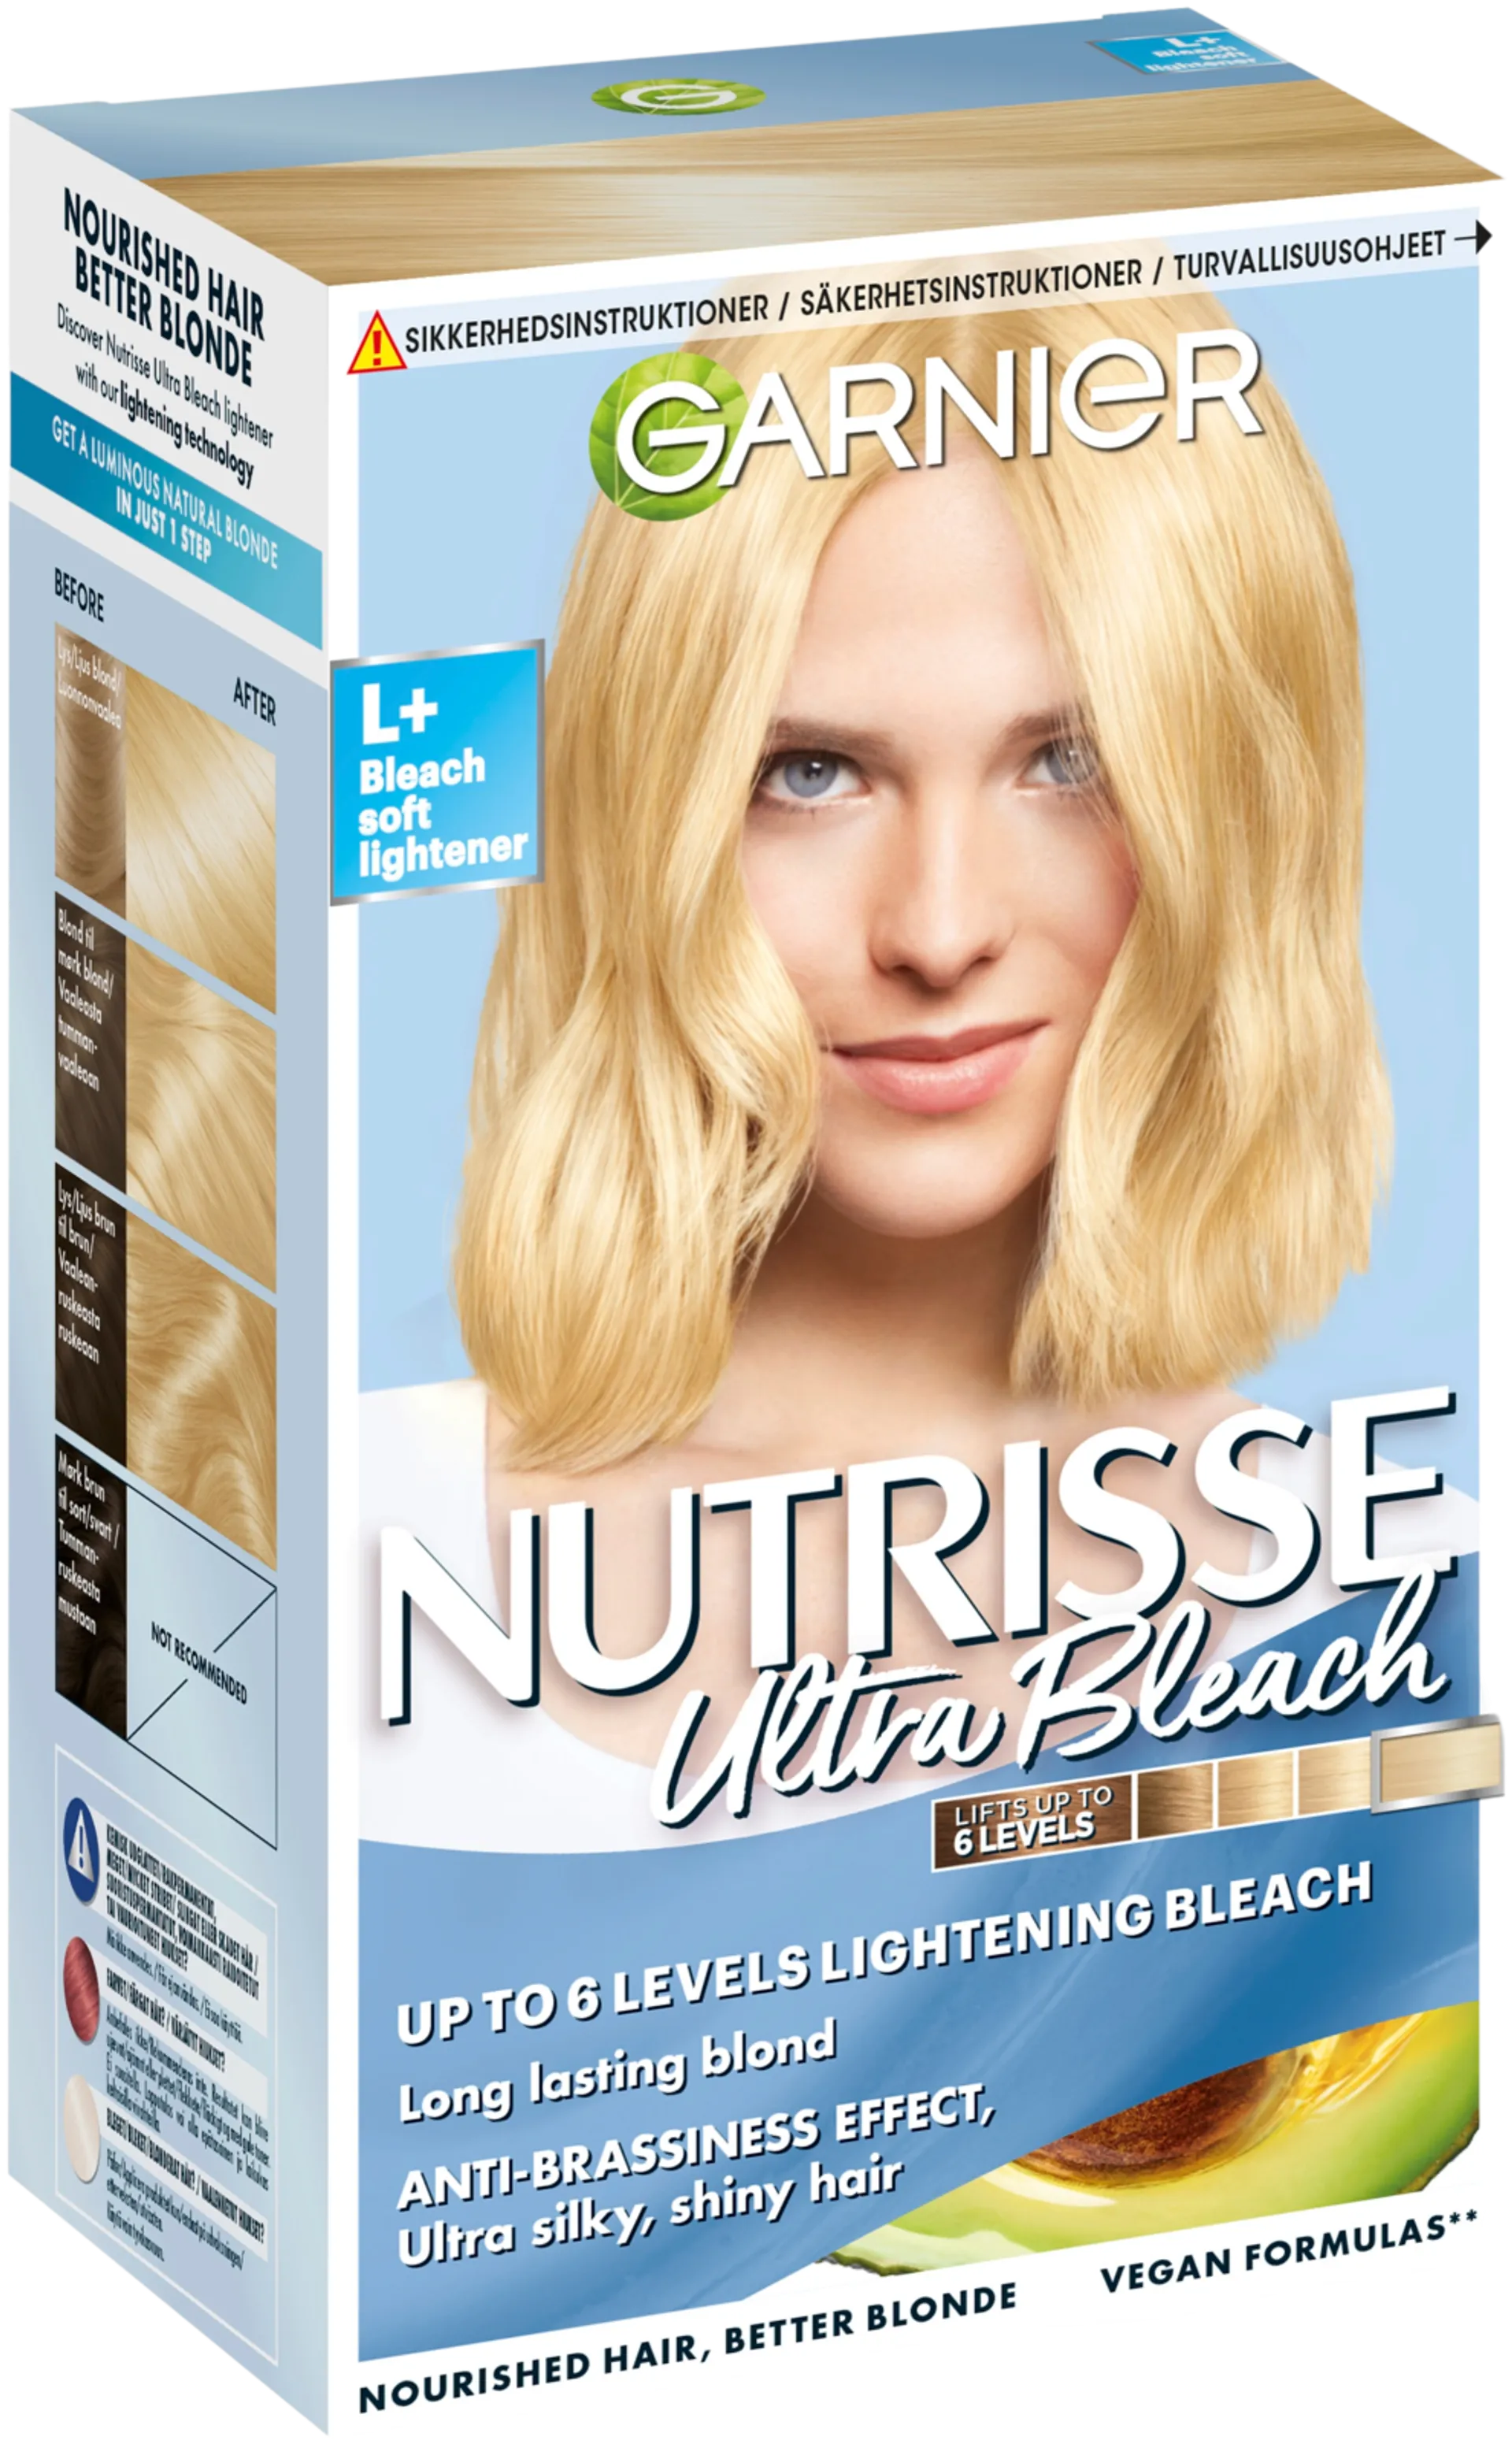 Garnier Nutrisse Ultra Bleach L+ Bleach Soft Lightener värinpoisto 1kpl - 1